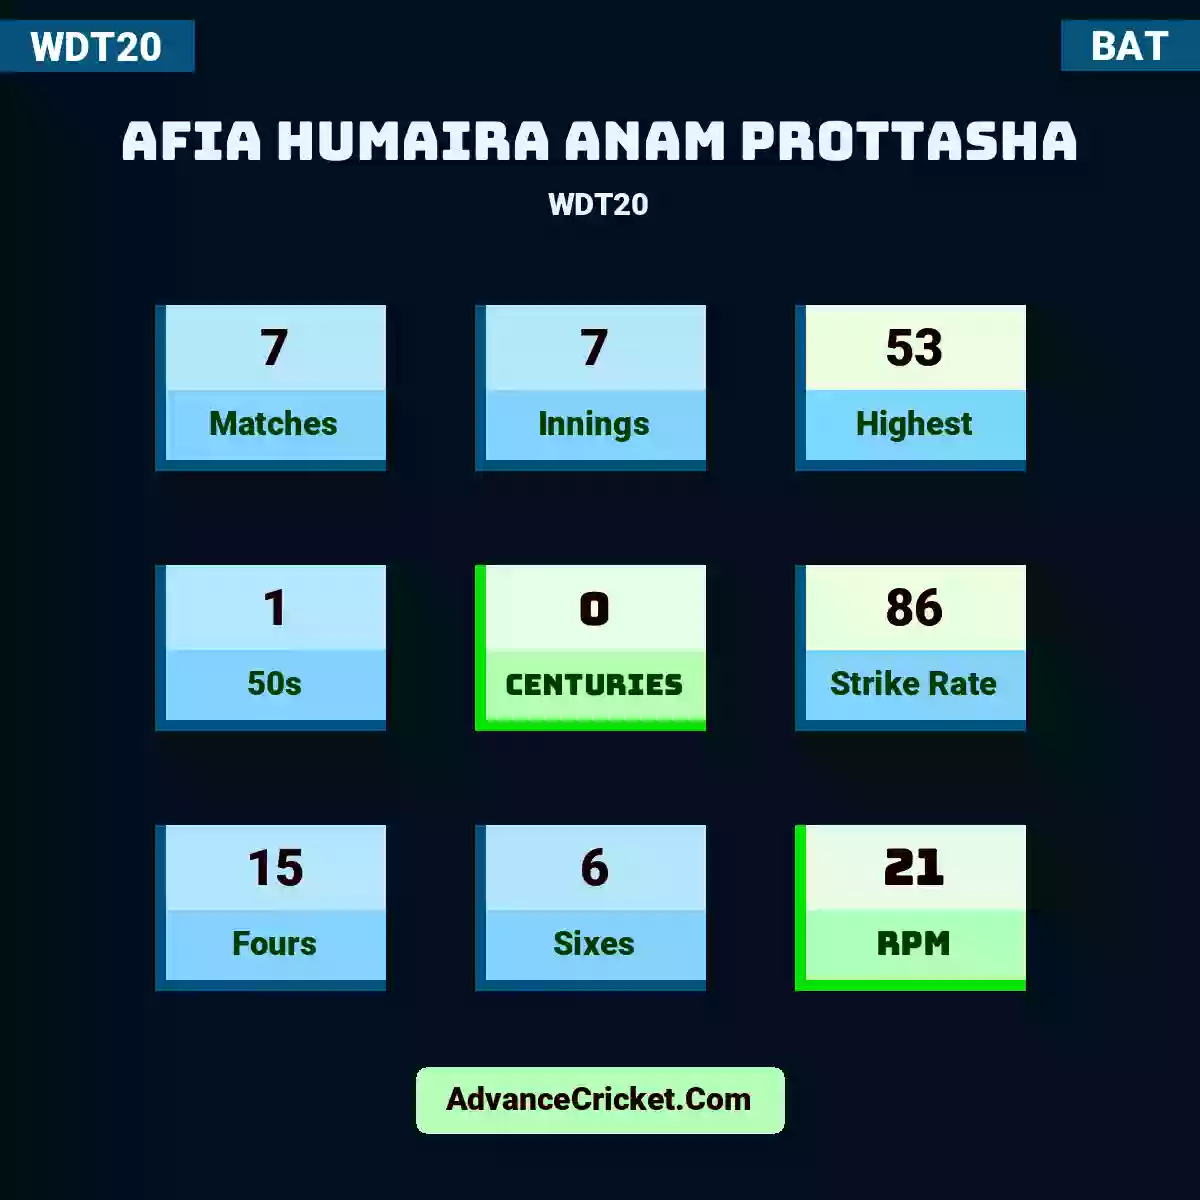 Afia Humaira Anam Prottasha WDT20 , Afia Humaira Anam Prottasha played 7 matches, scored 53 runs as highest, 1 half-centuries, and 0 centuries, with a strike rate of 86. A.Humaira.Anam.Prottasha hit 15 fours and 6 sixes, with an RPM of 21.